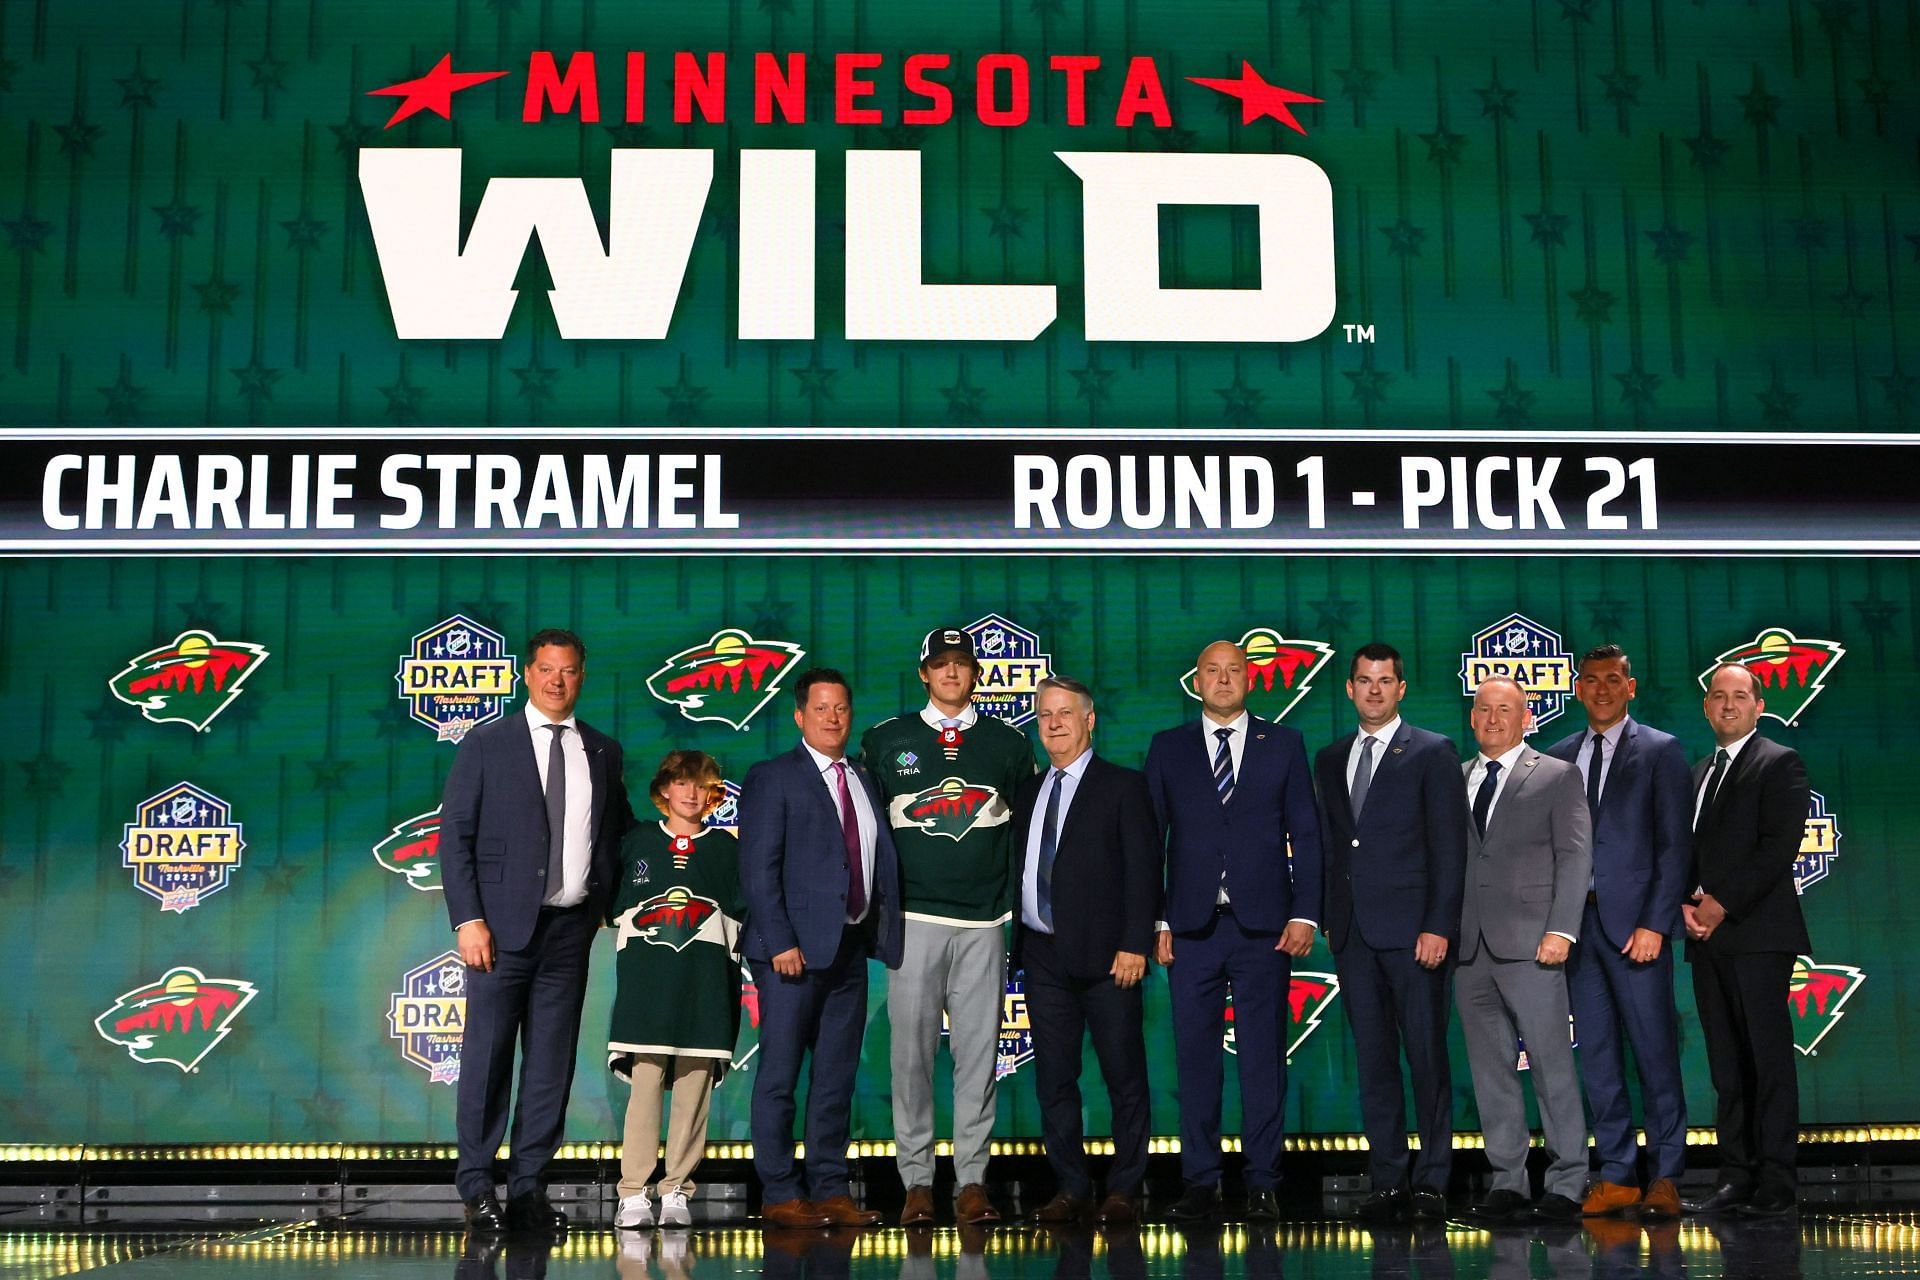 Minnesota Wild PR on X: Here's the roster for #mnwild Development